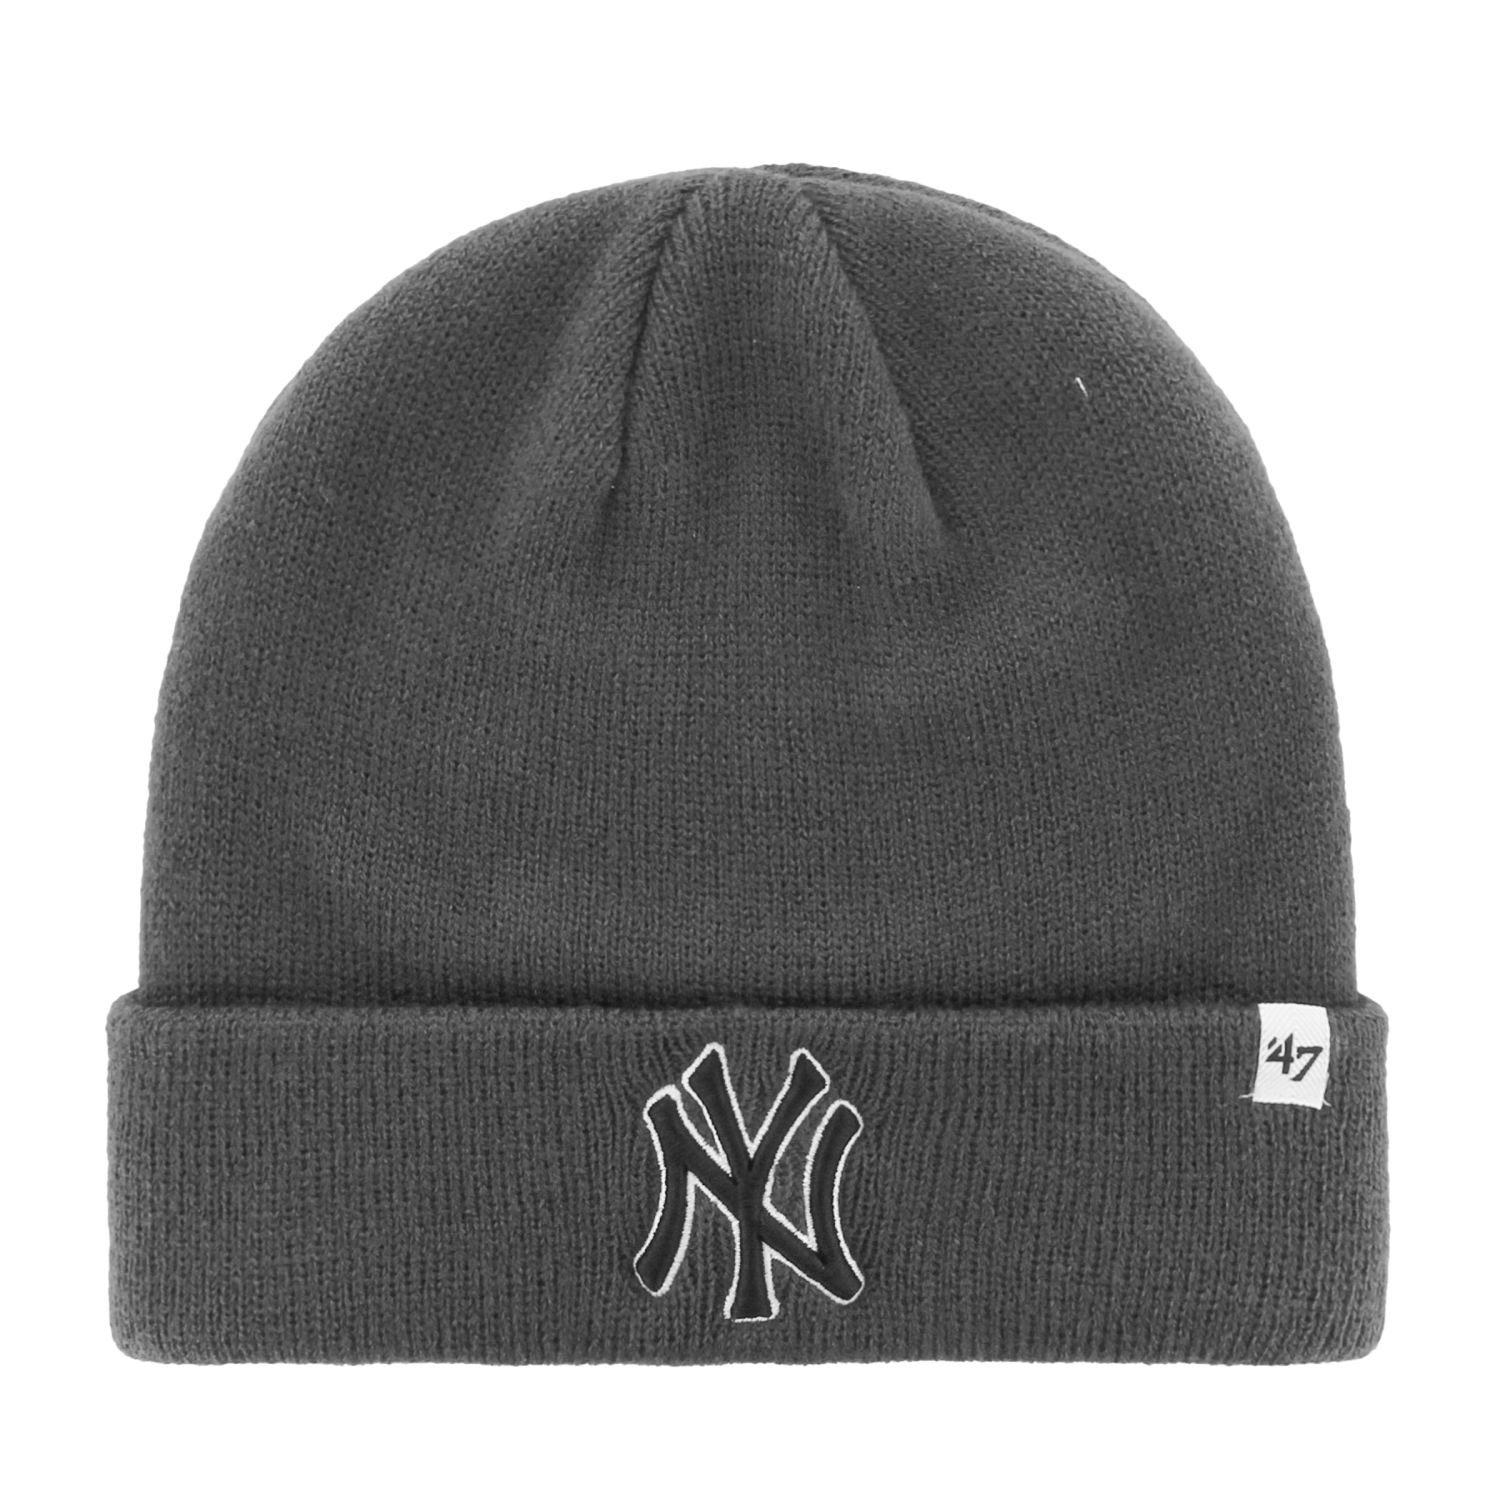 '47 Brand Fleecemütze Knit Beanie Raised Cuff New York Yankees